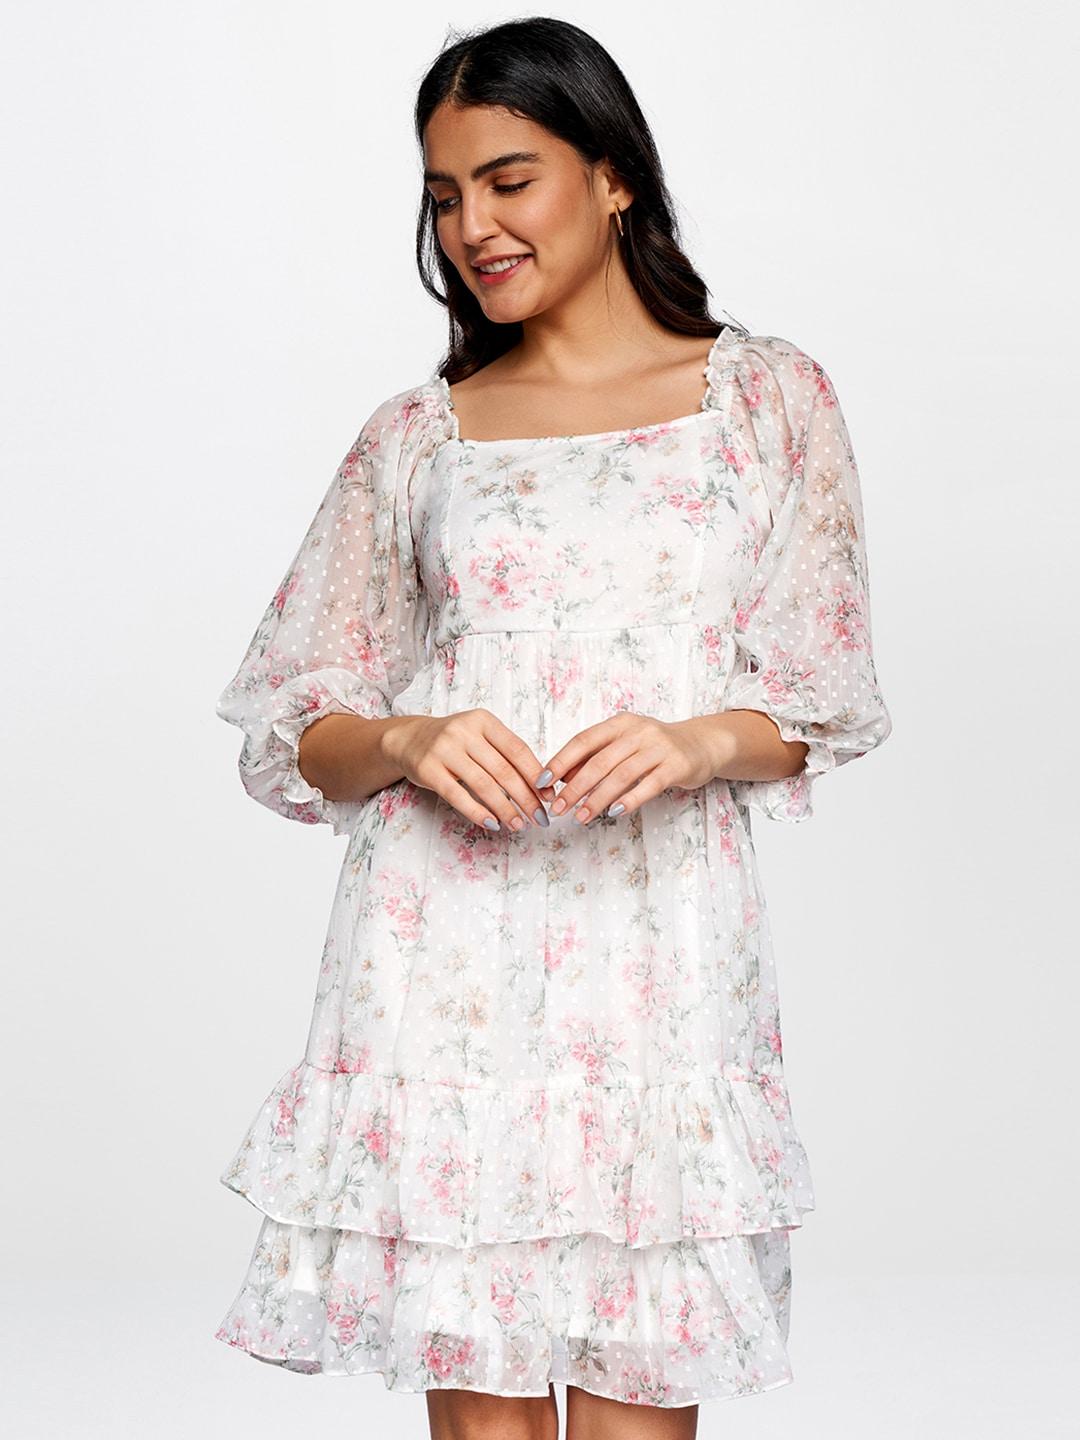 AND White & Pink Floral Print Flounce Hem Dress